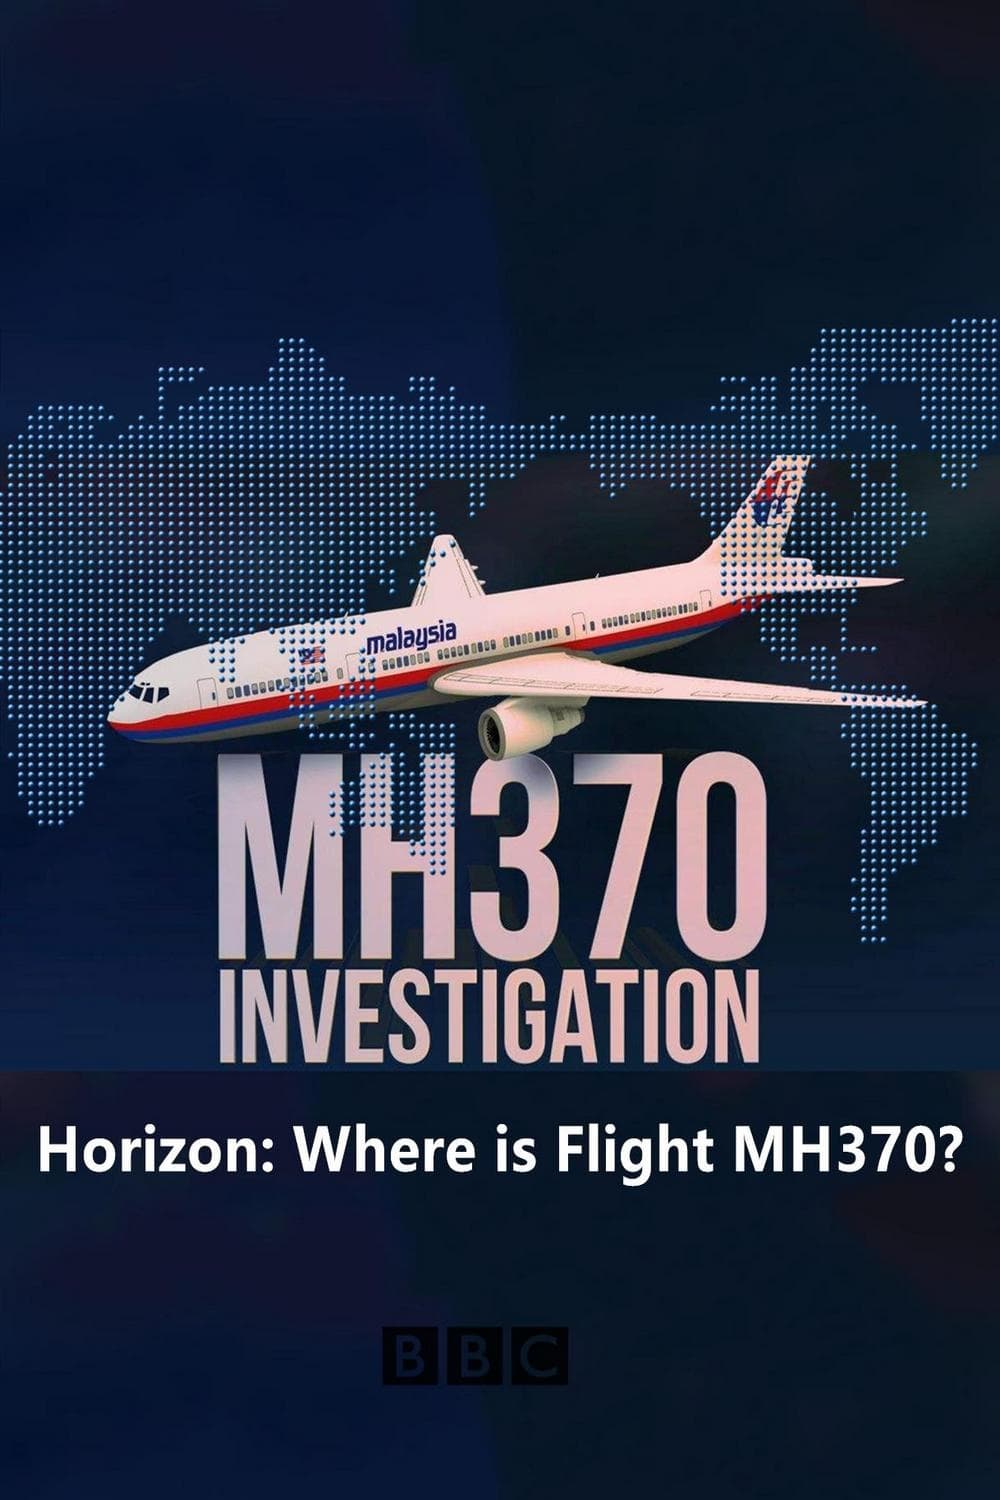 Horizon: Where is Flight MH370?